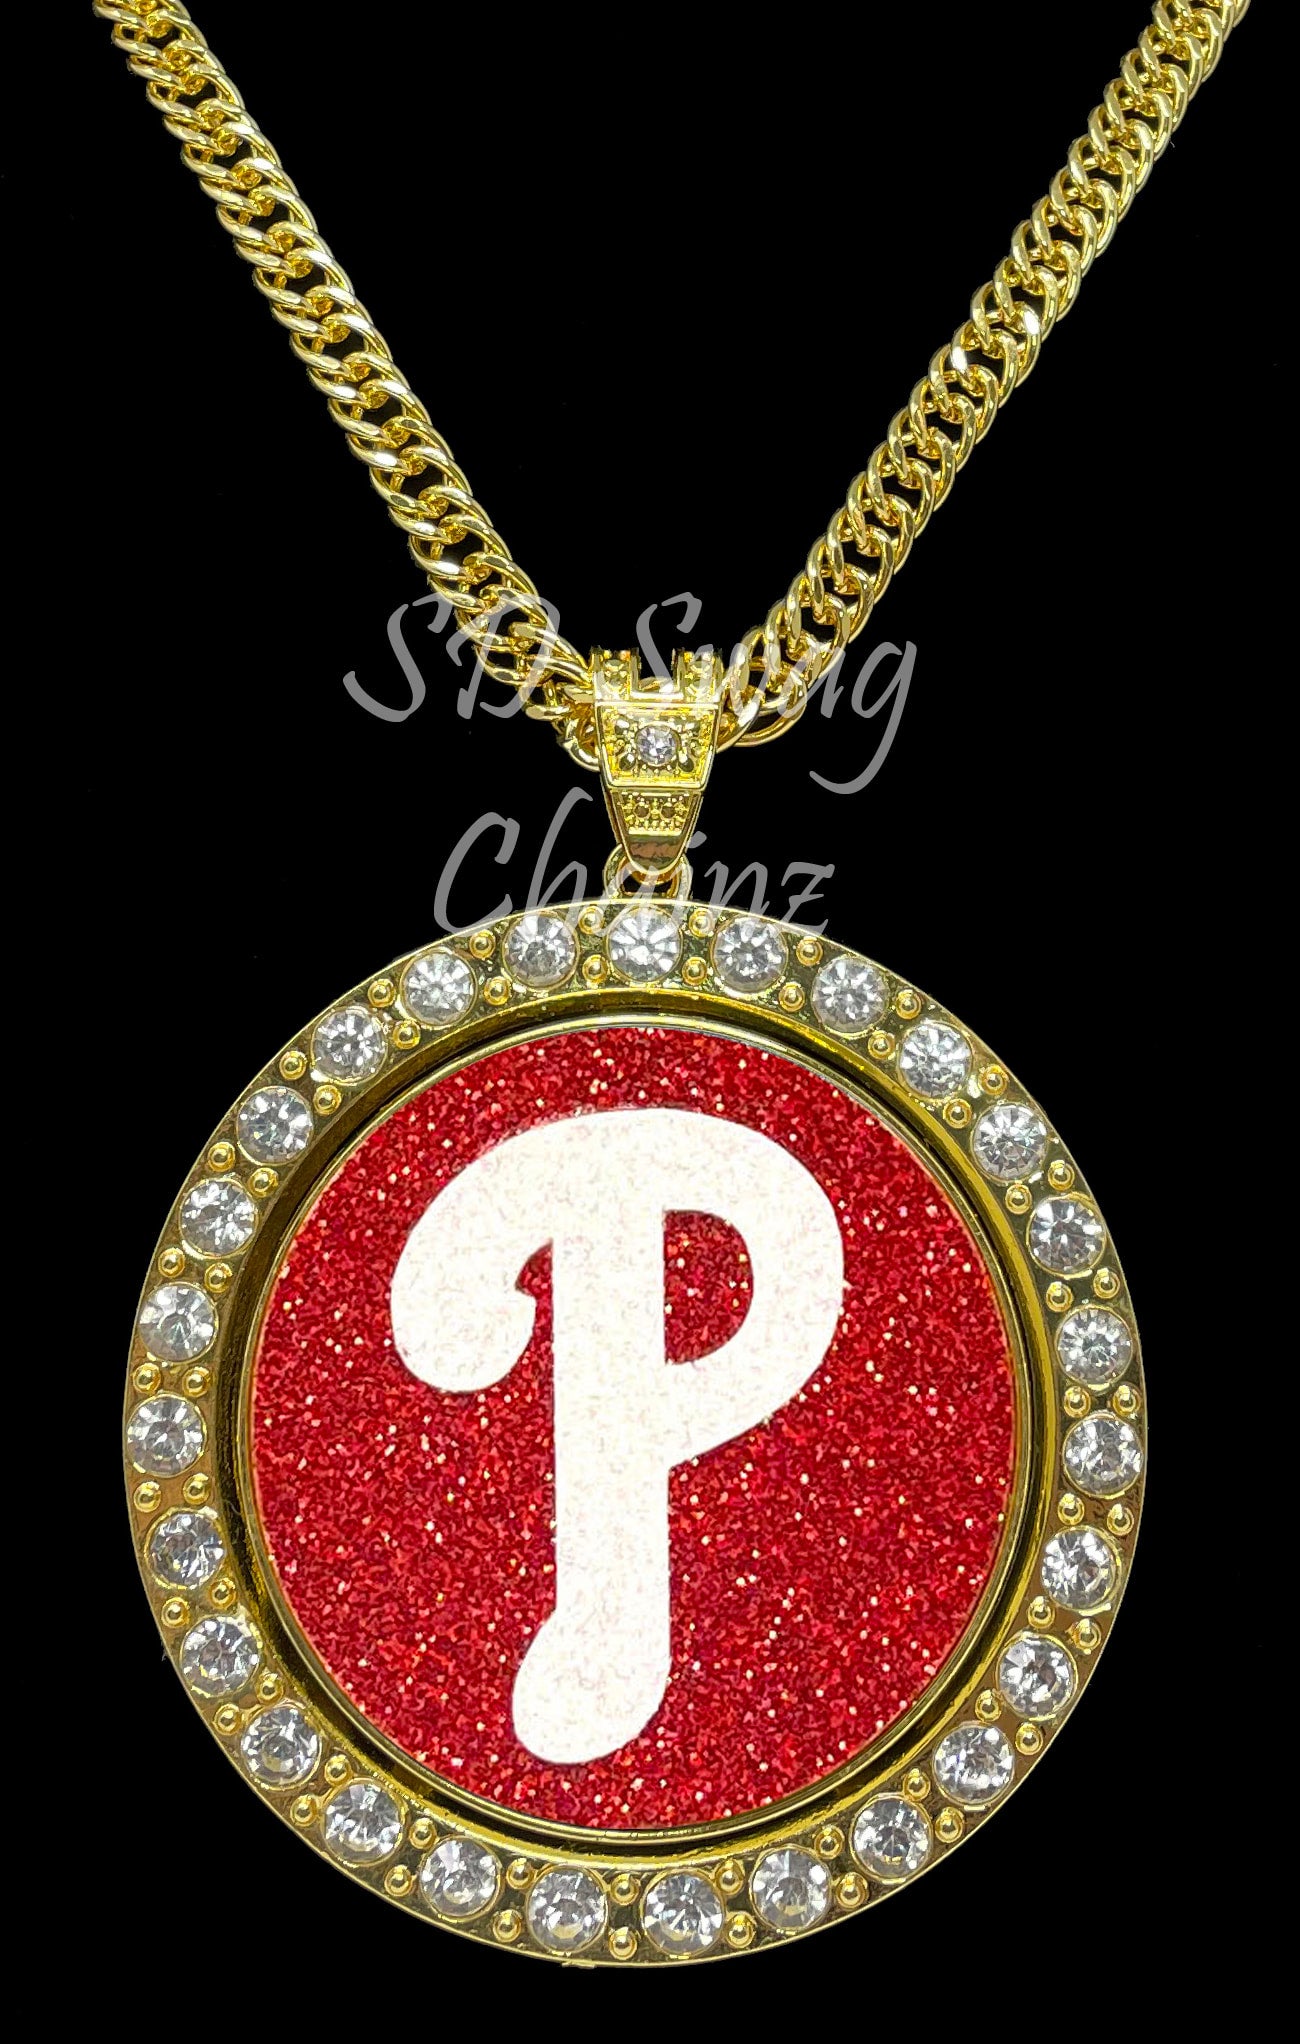 Philadelphia Phillies Beads with Medallion Mardi Gras Style Alternate -  Sports Fan Shop